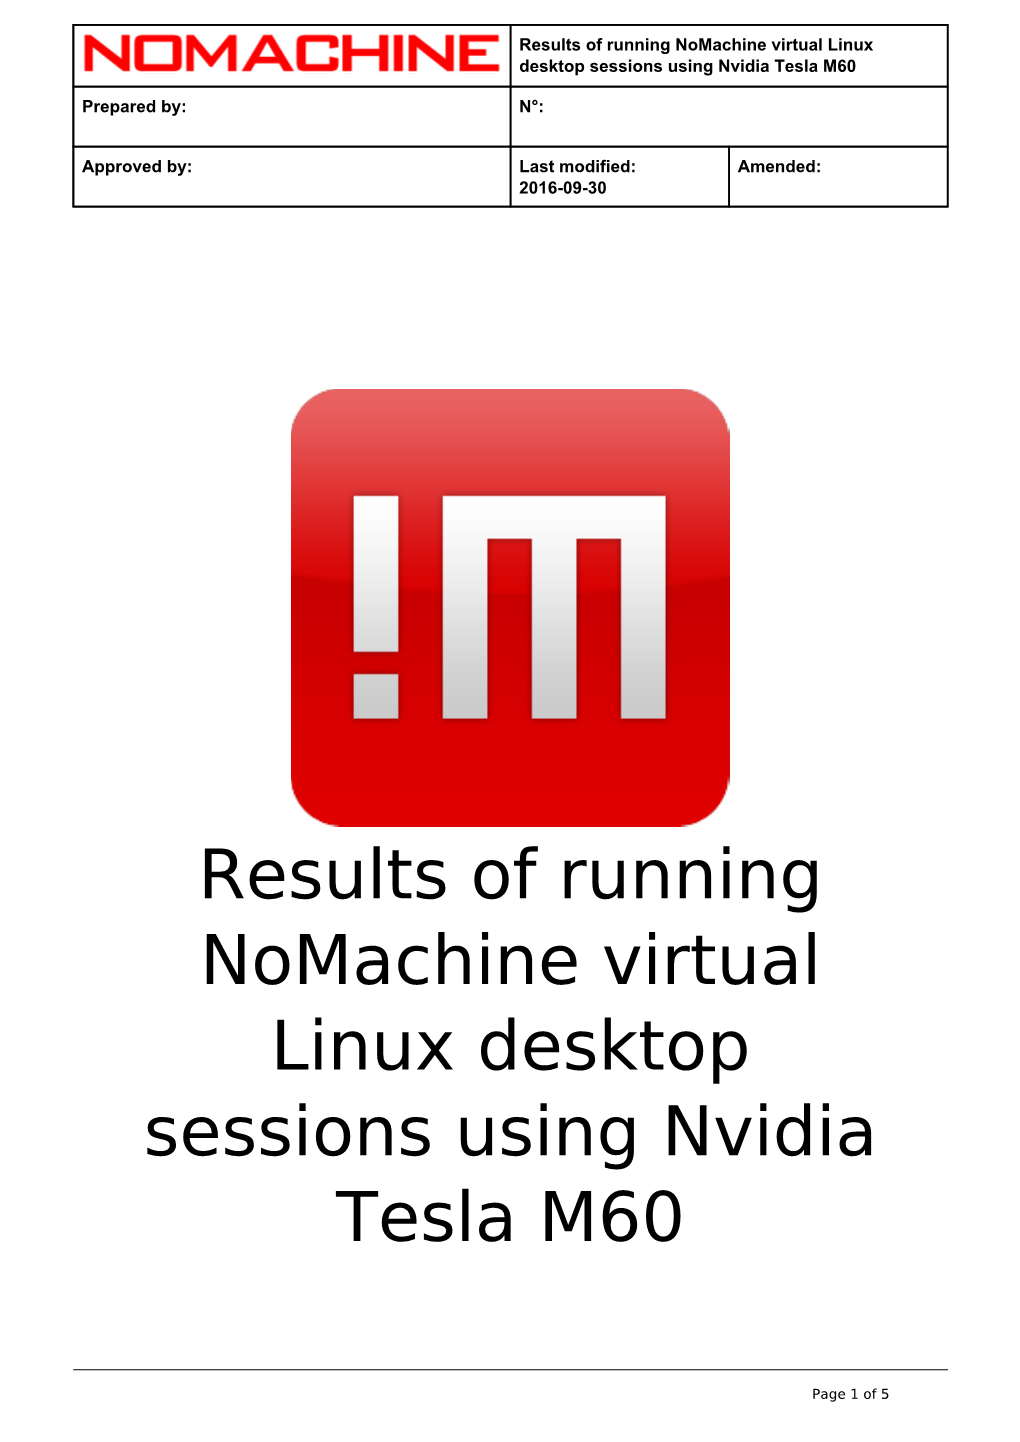 Results of Running Nomachine Virtual Linux Desktop Sessions Using Nvidia Tesla M60